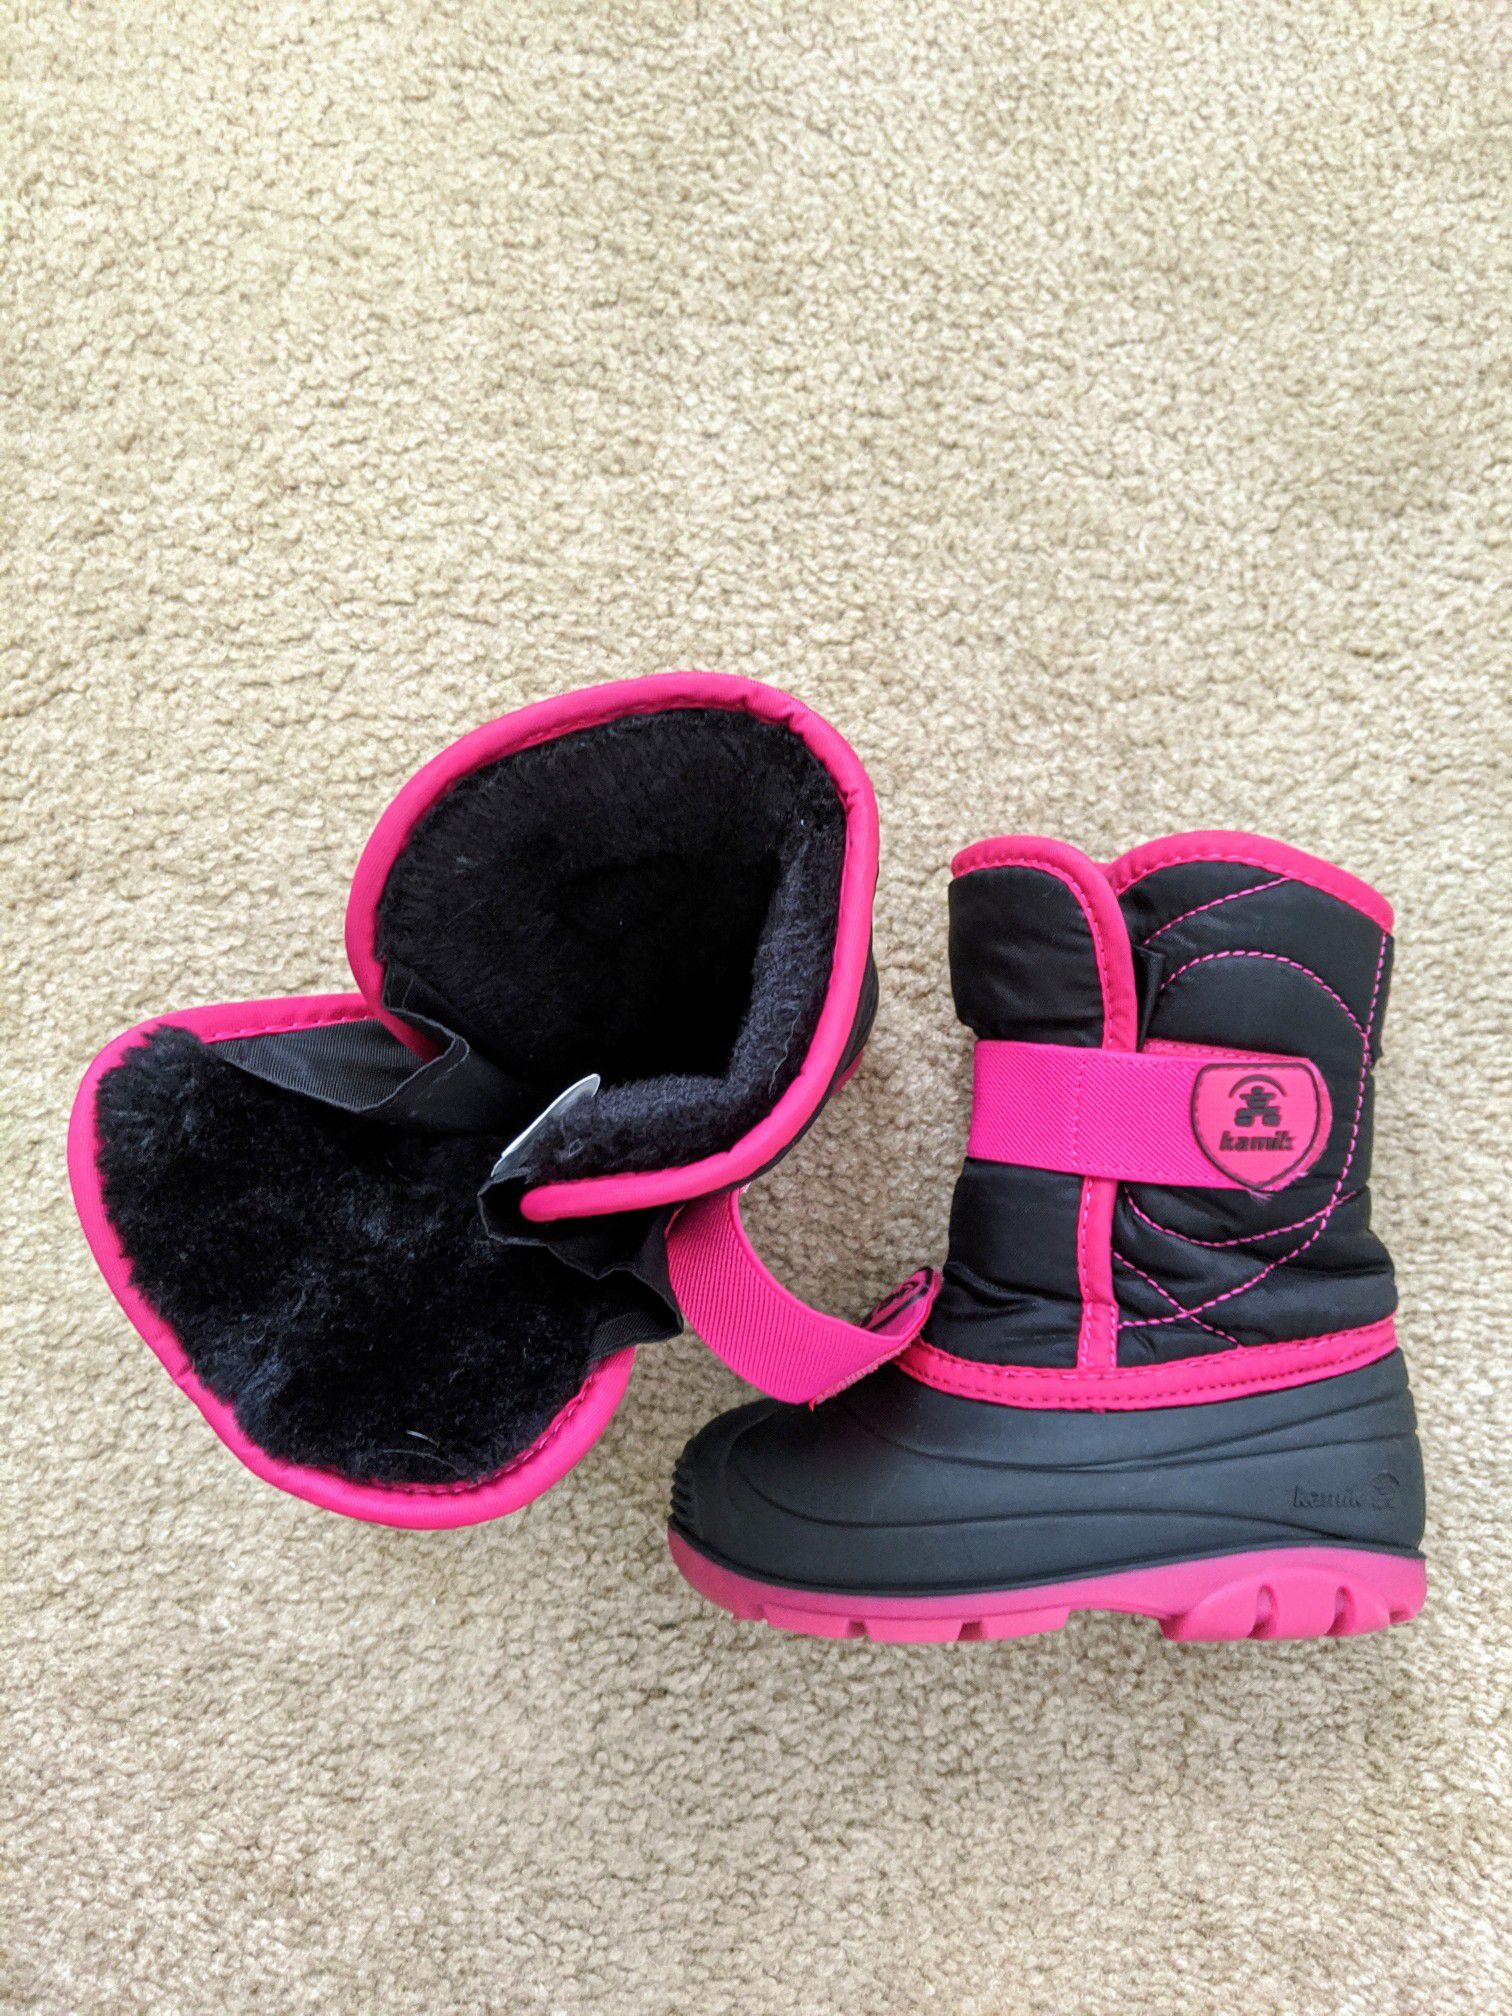 Kamik Toddler Girl Winter Boots Size 9